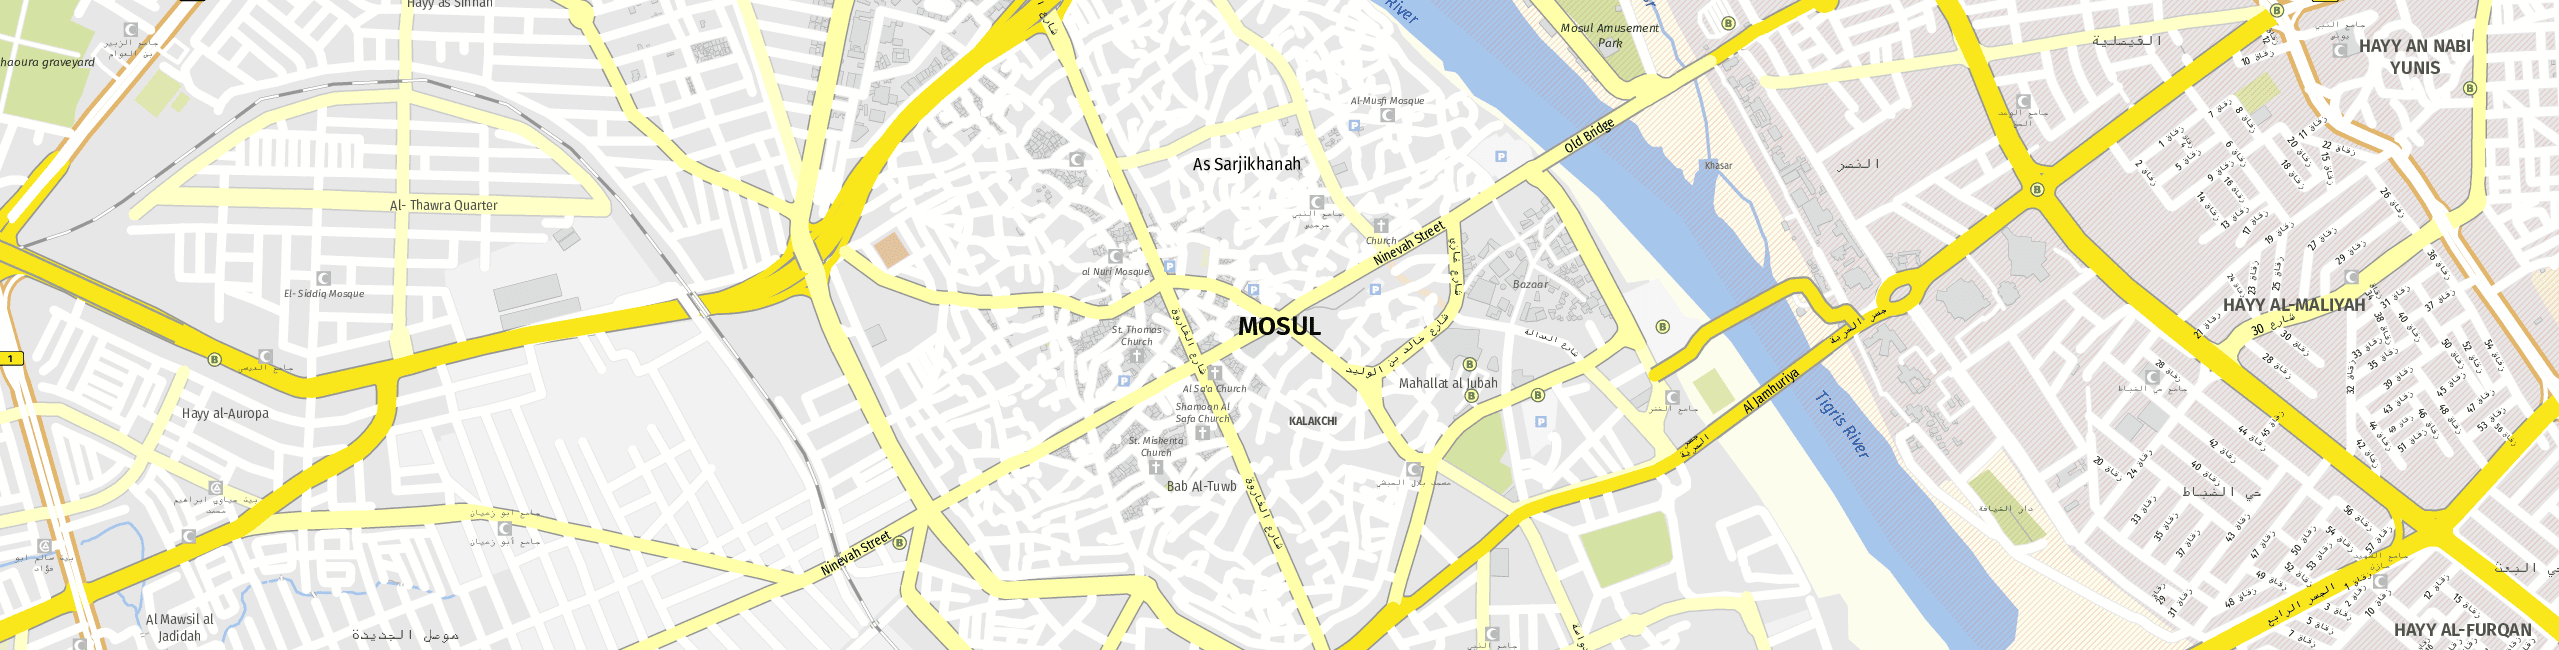 Stadtplan Mossul zum Downloaden.